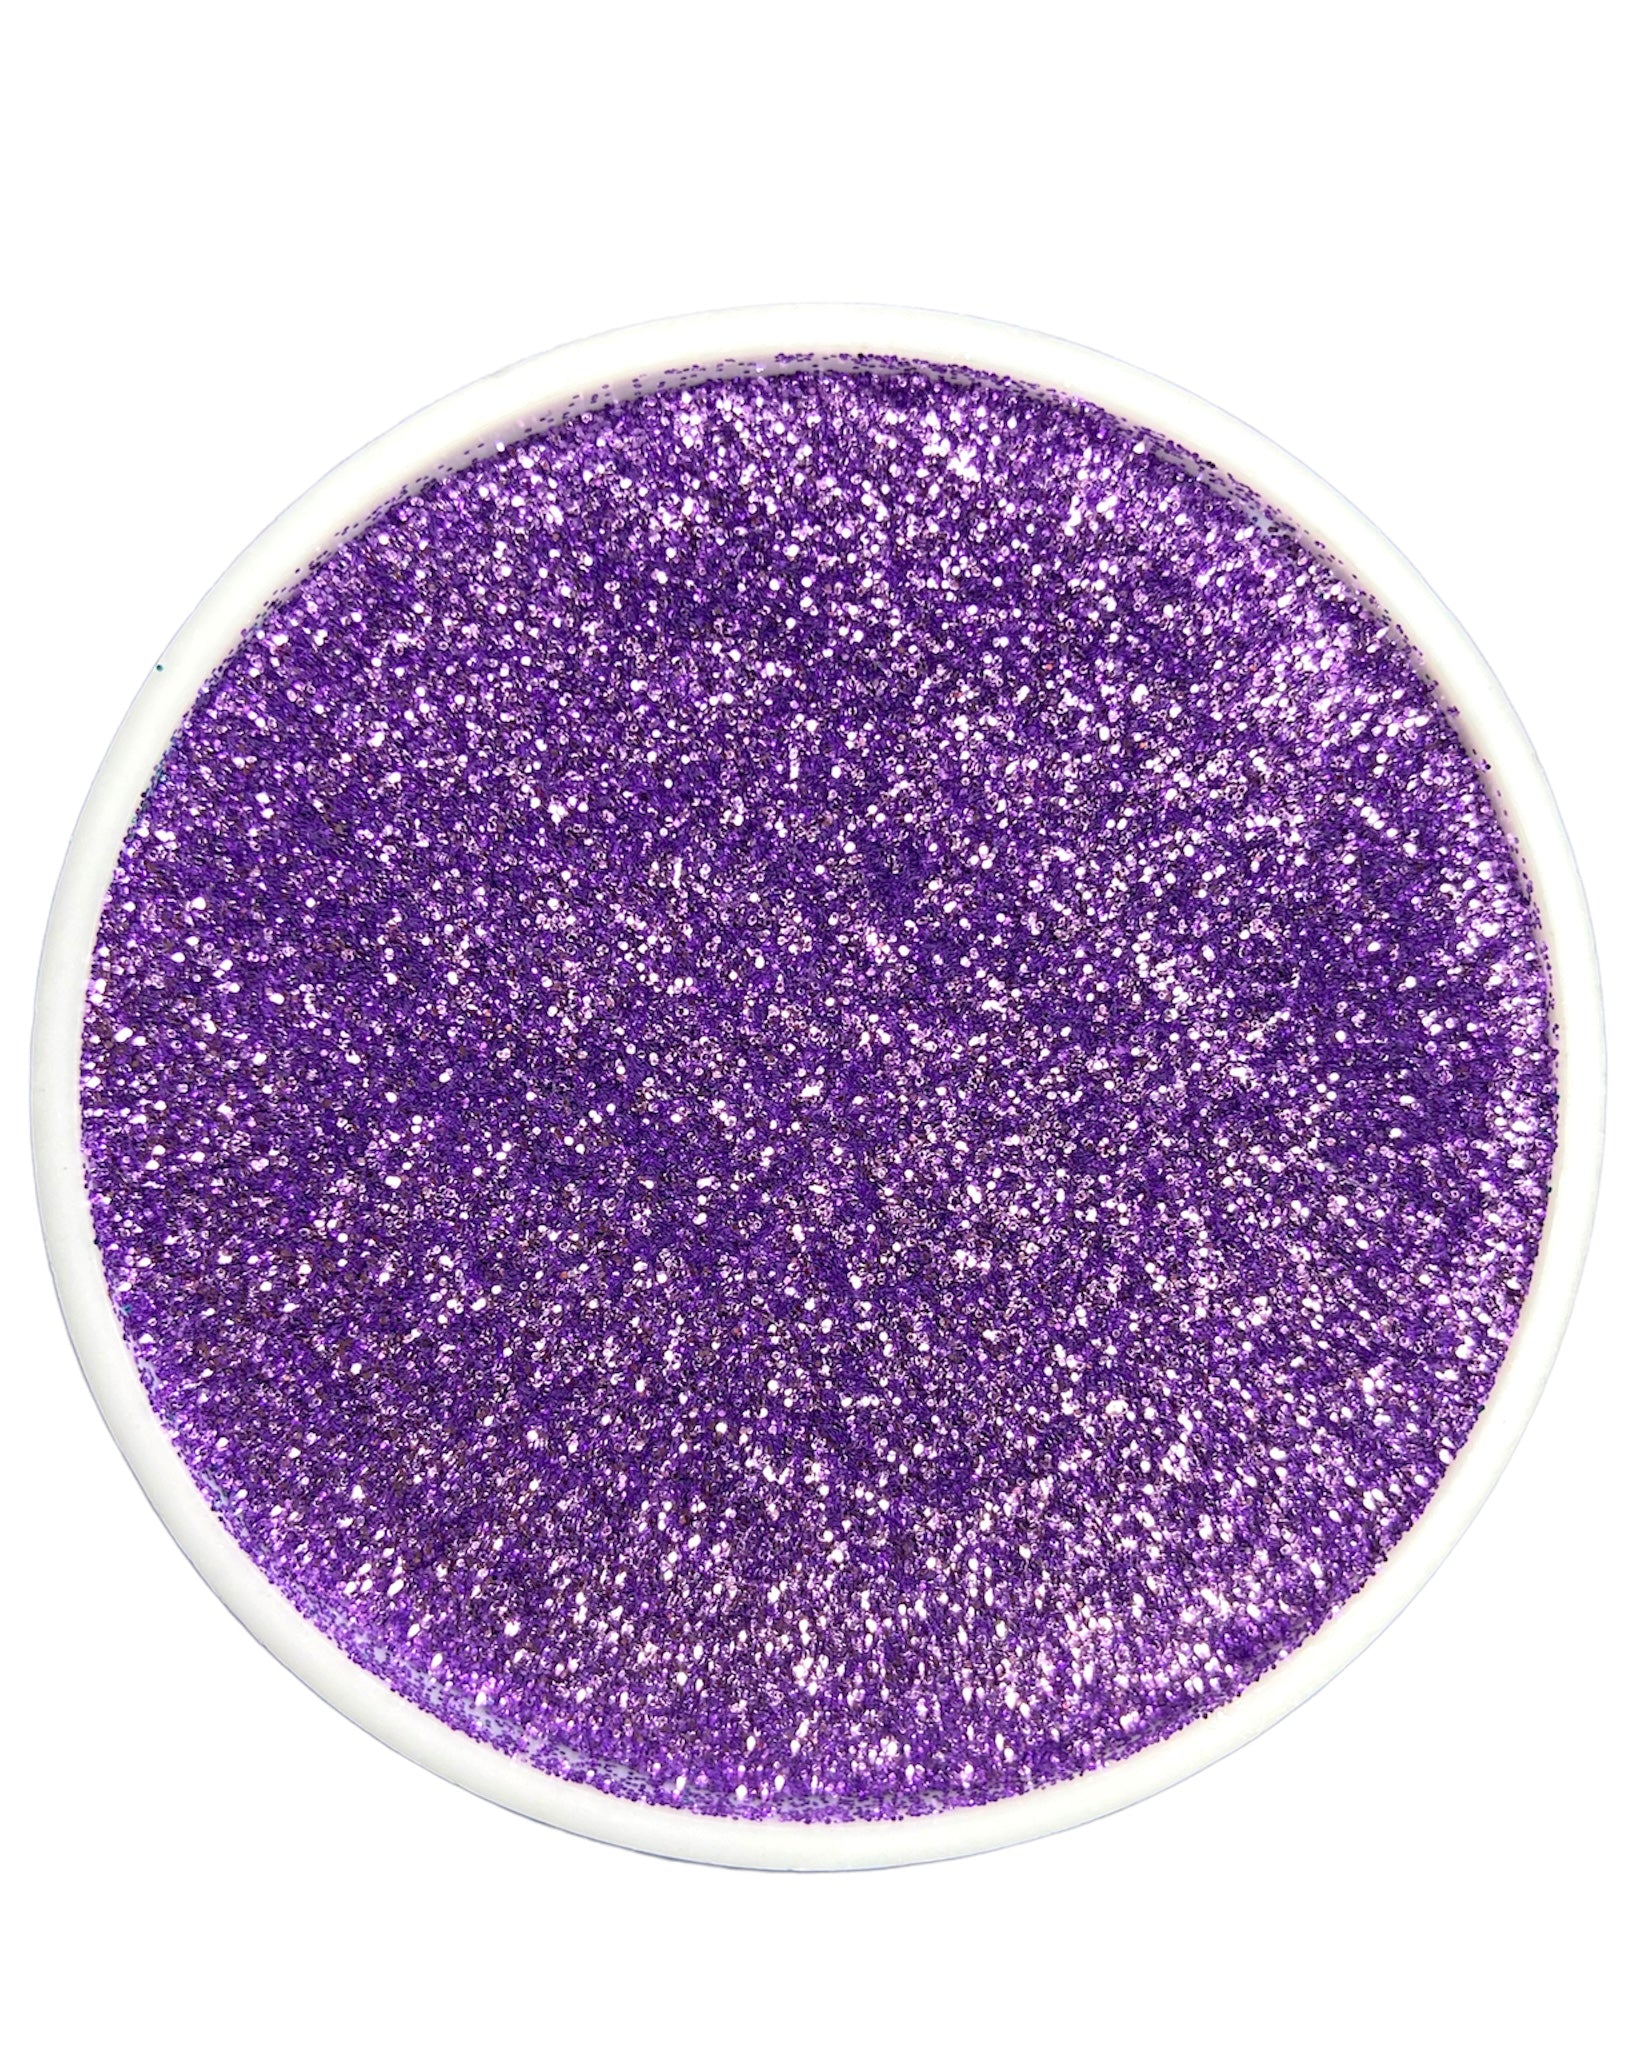 Medium fine purple glitter